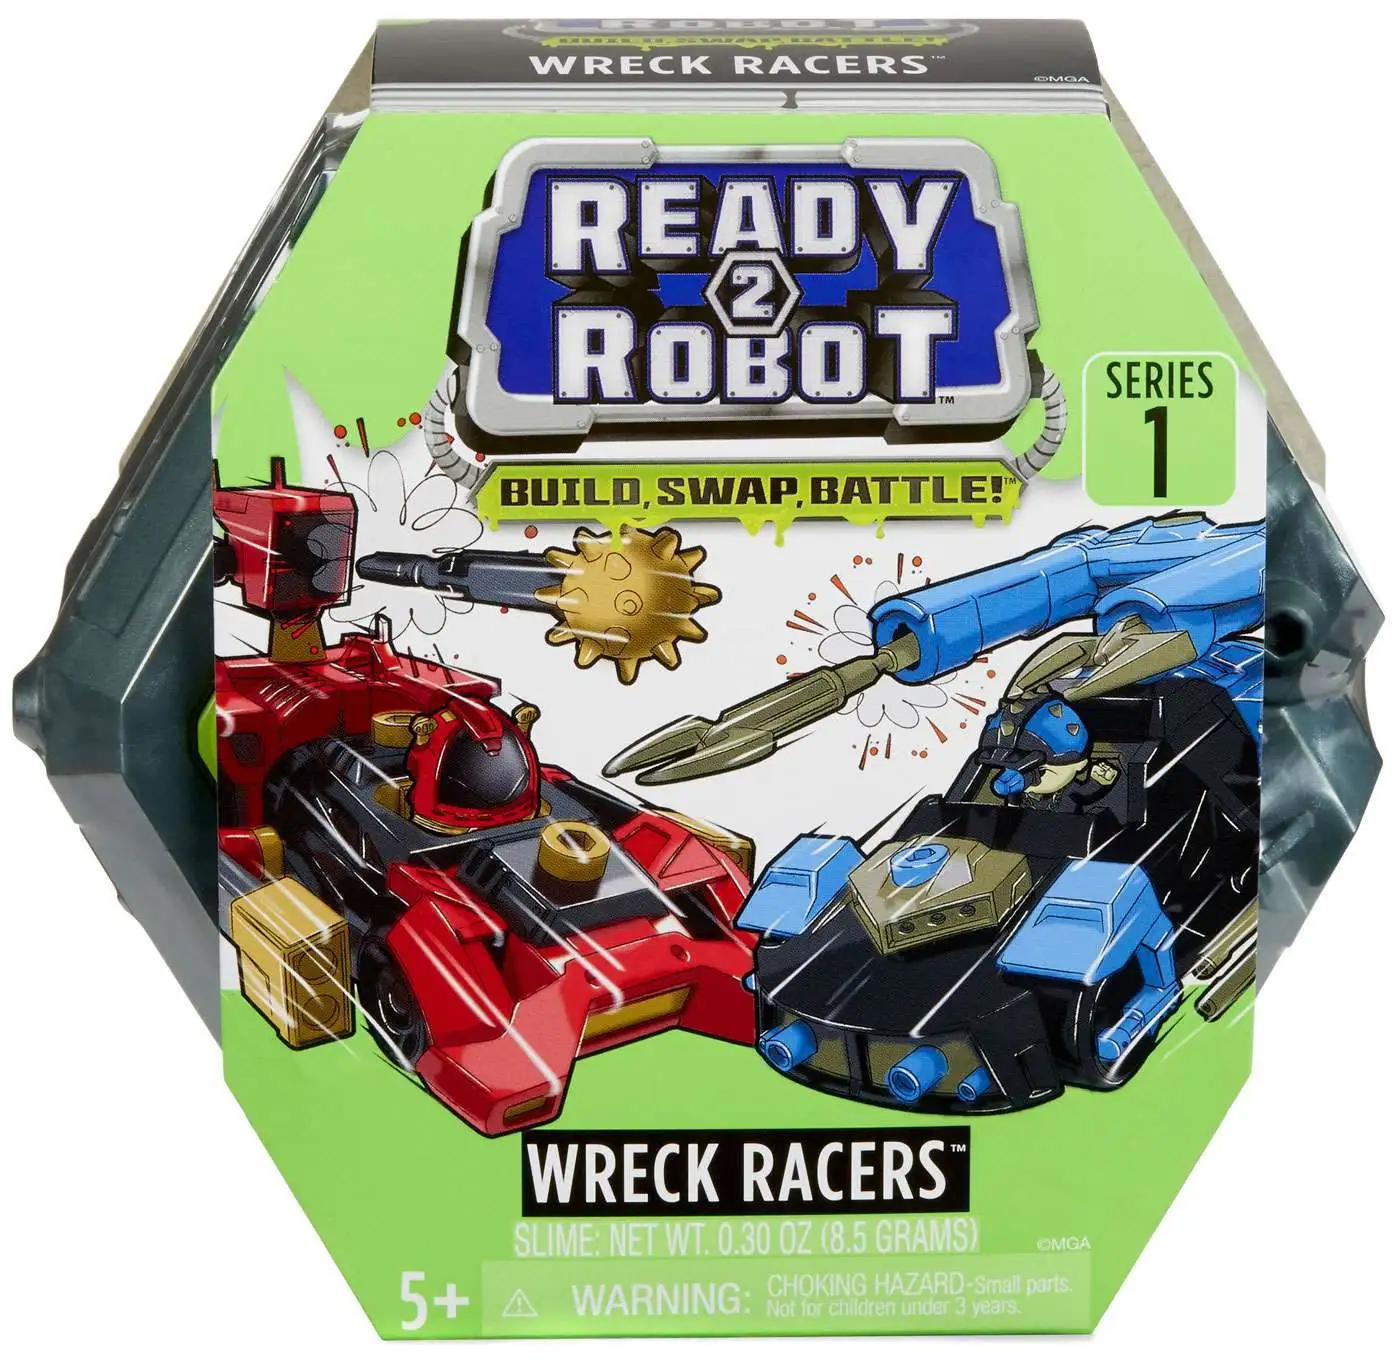 Battle Ready 2 Robot Series 1 Lot of 4 Swap Make Slime Mystery Pack 